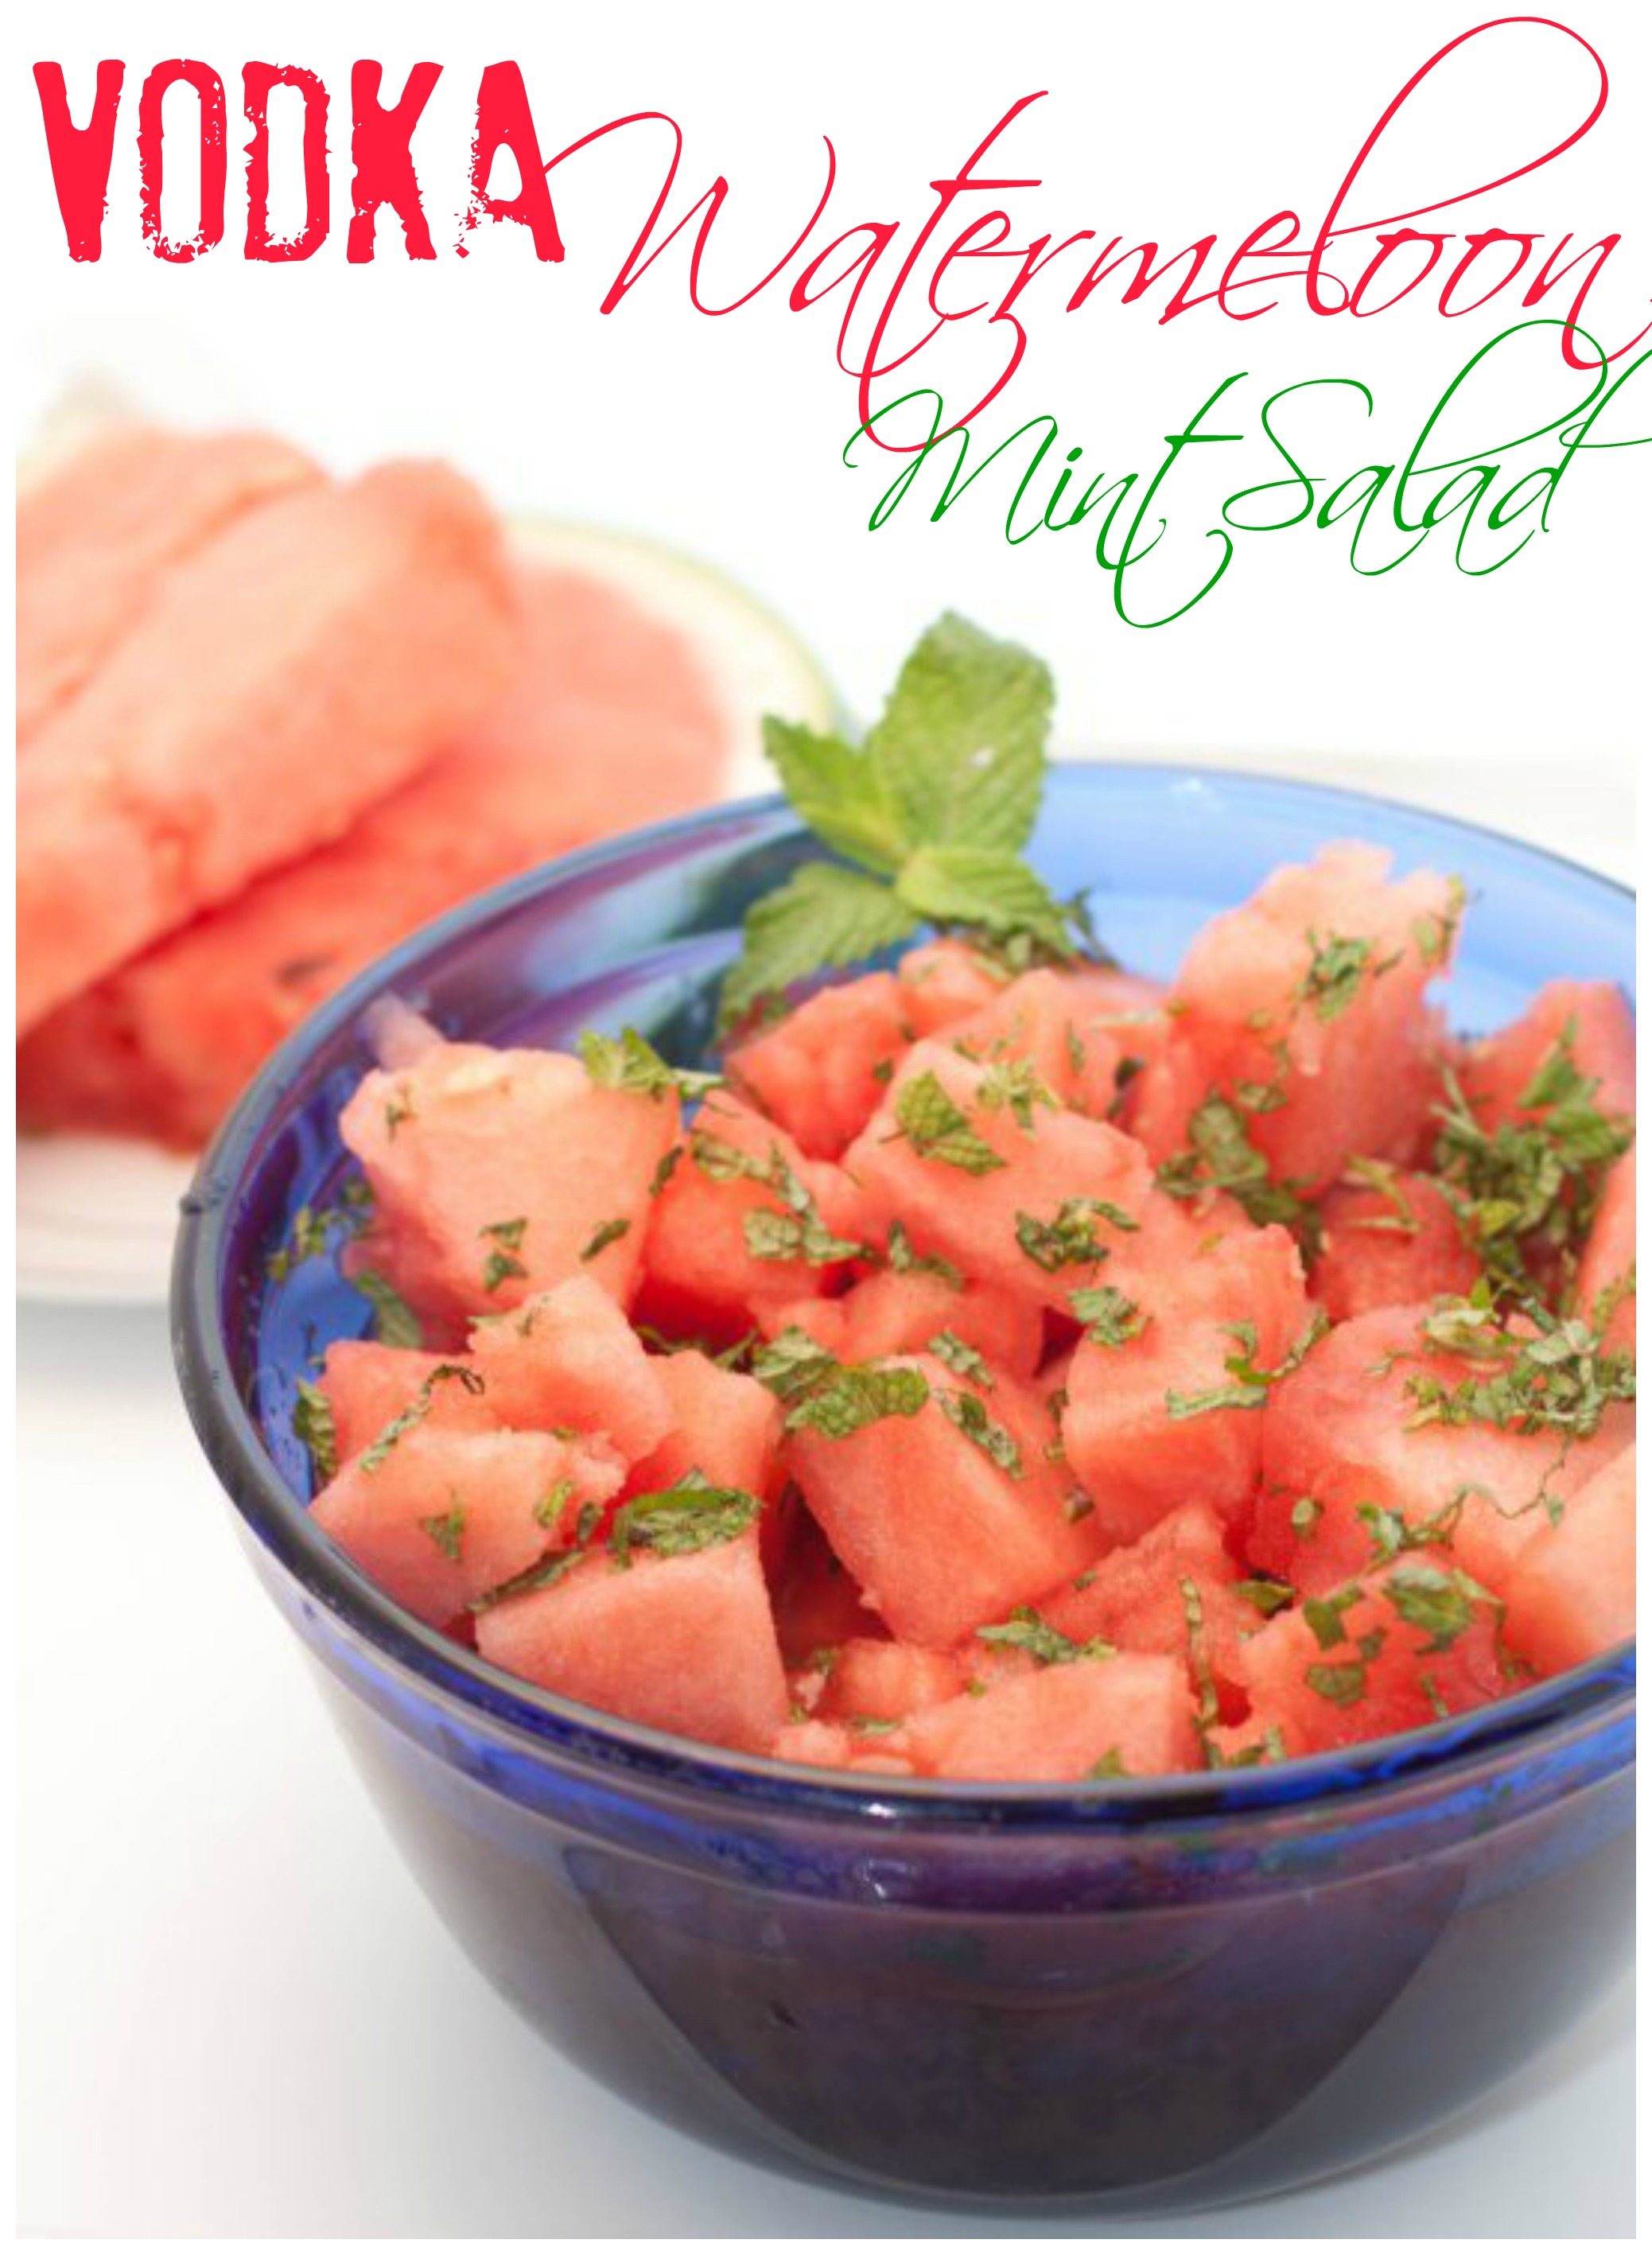 Watermelon Vodka Mint Salad - Served From Scratch